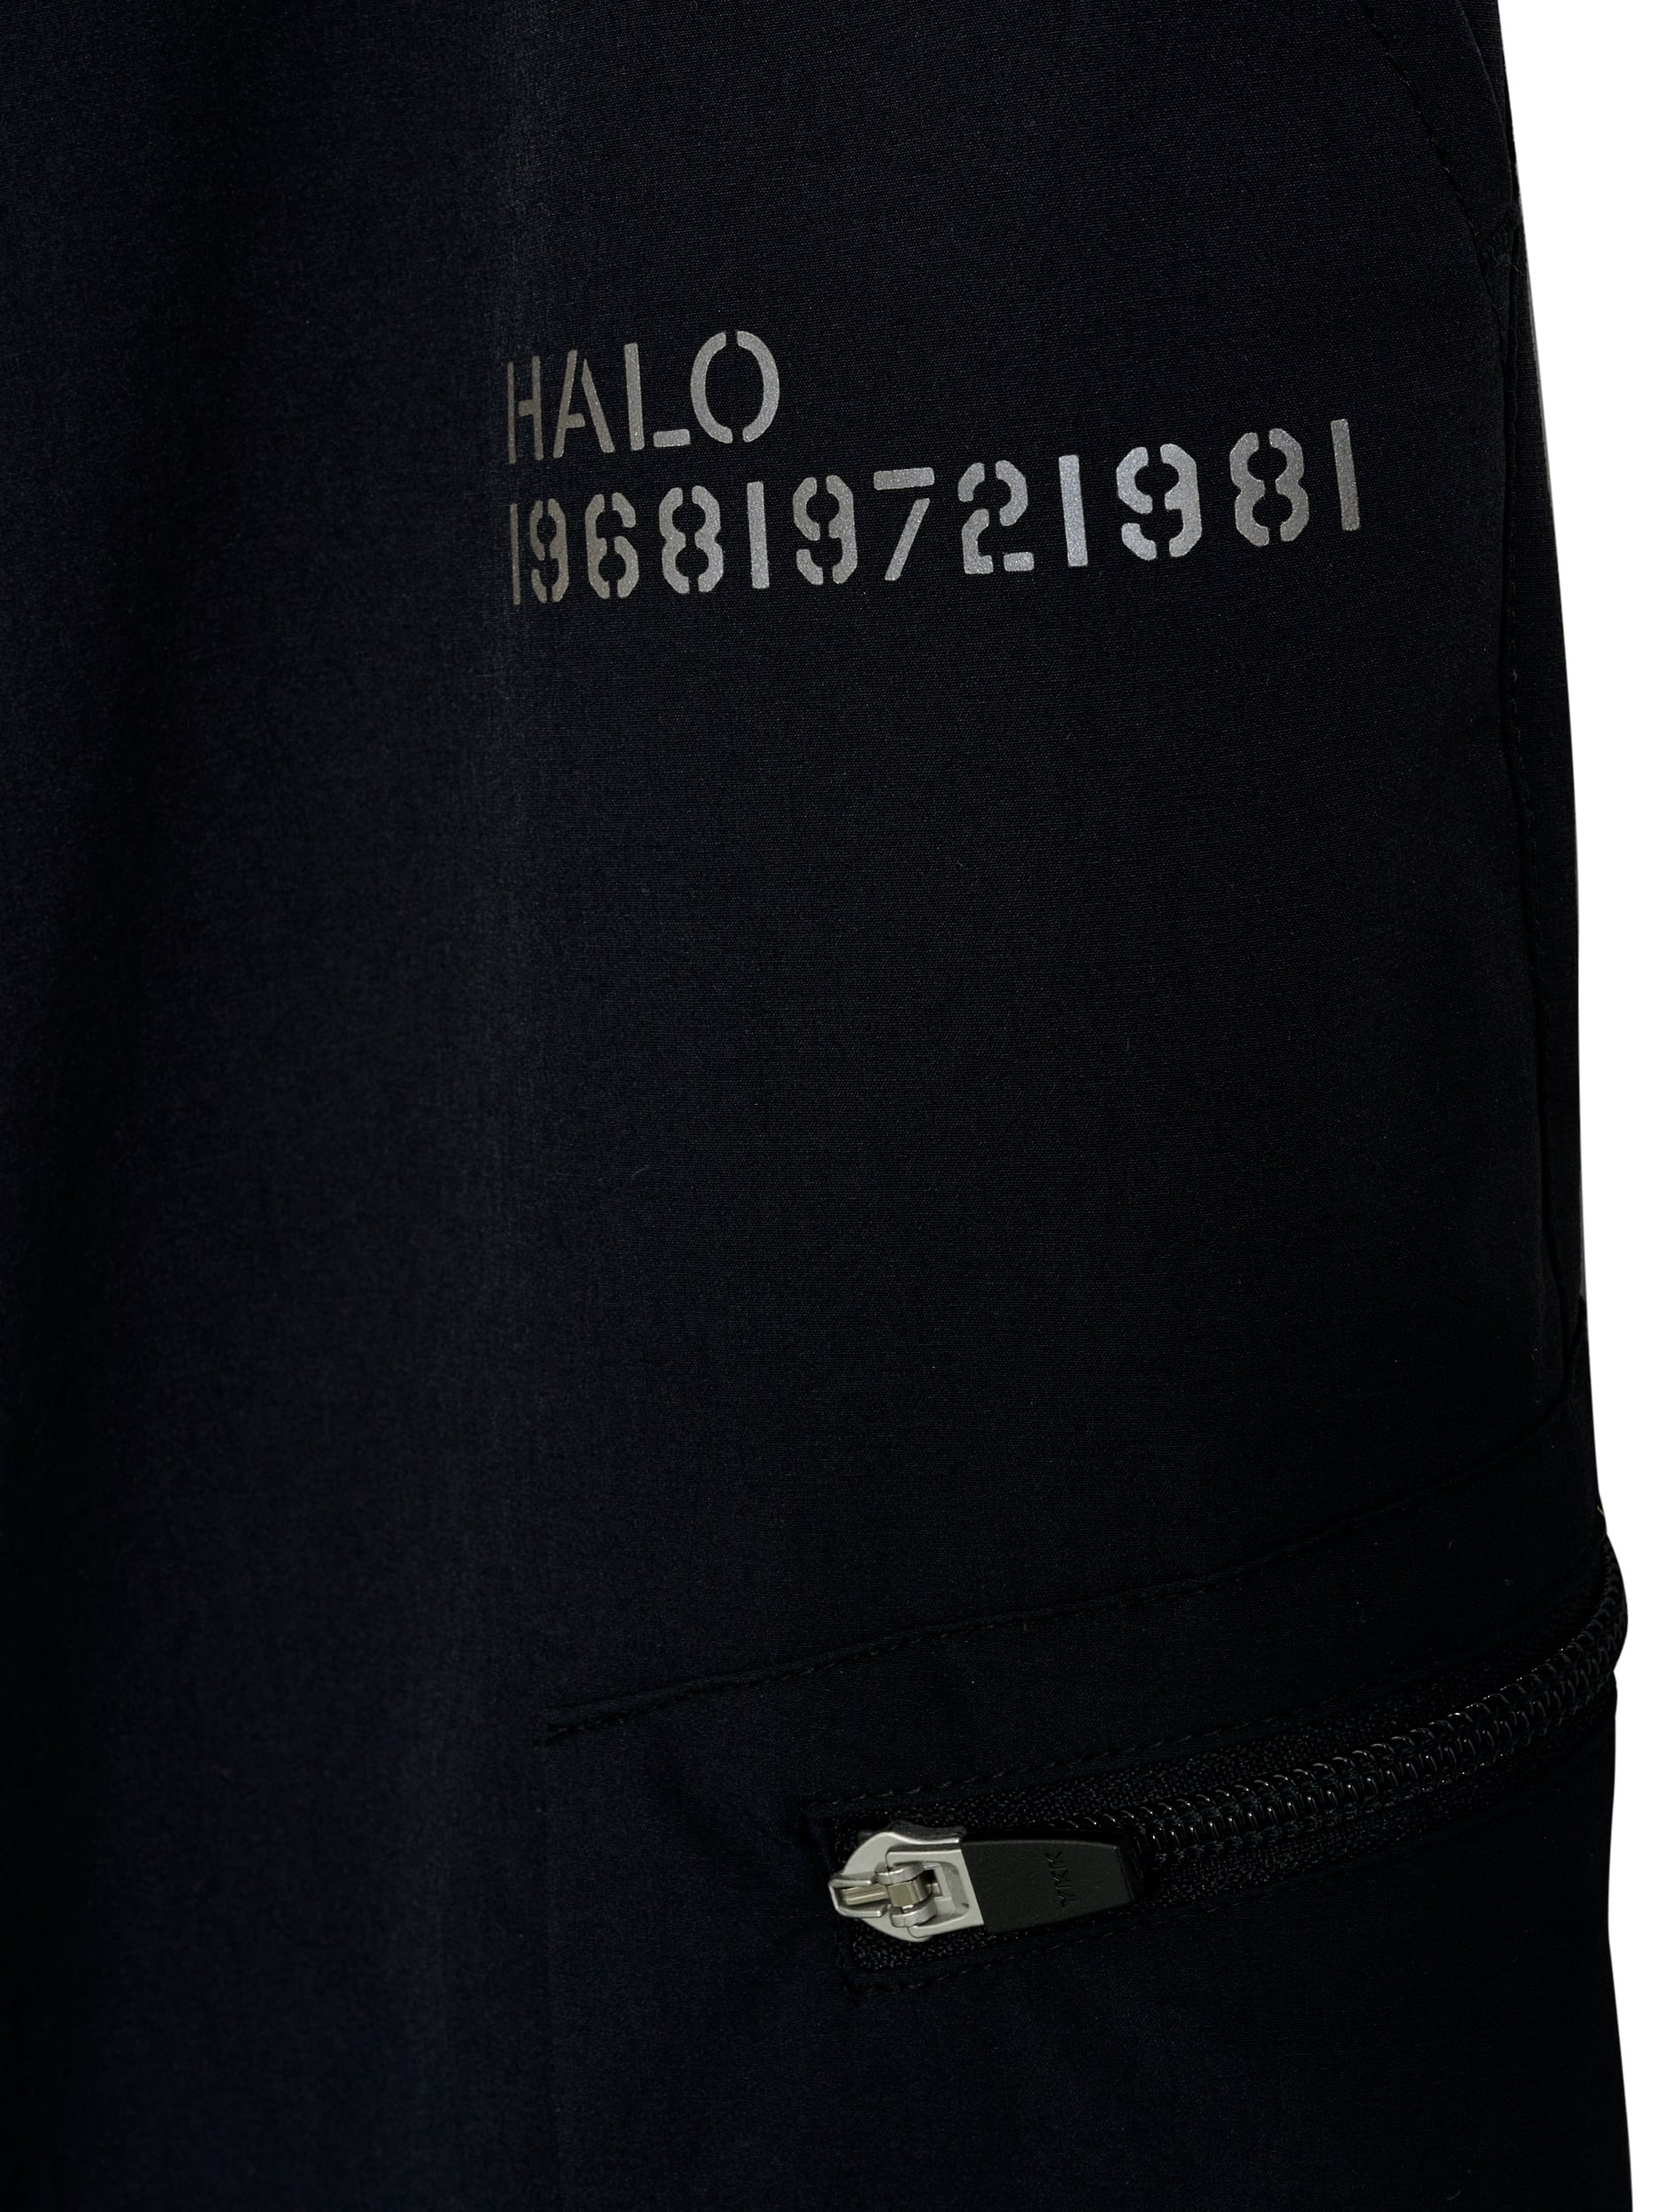 HALO New Trail Pants - Black Details